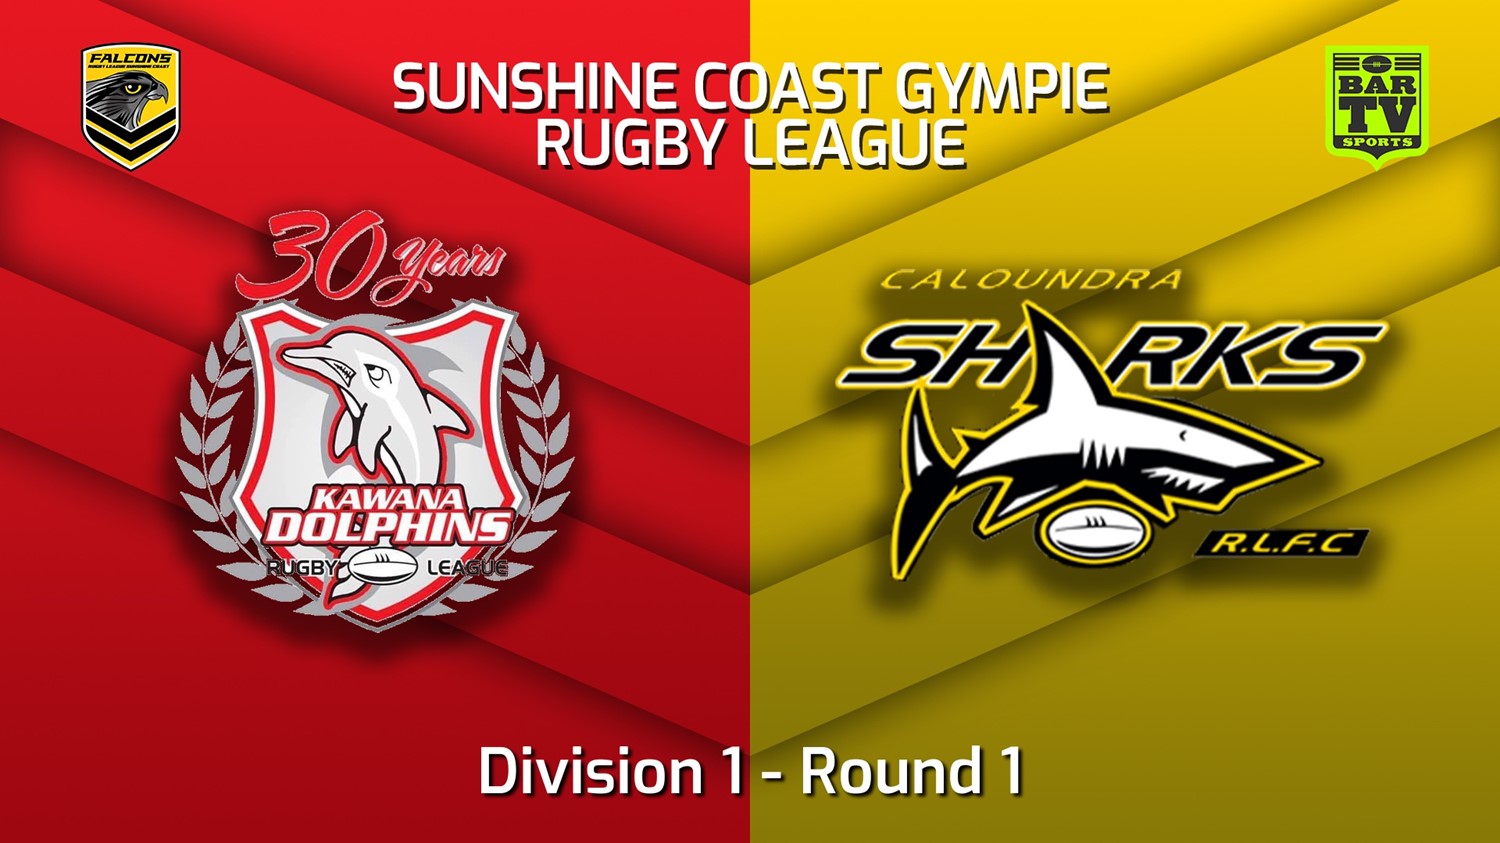 220402-2022 Sunshine Coast Gympie Rugby League Round 1 - Division 1 - Kawana Dolphins v Caloundra Sharks Minigame Slate Image